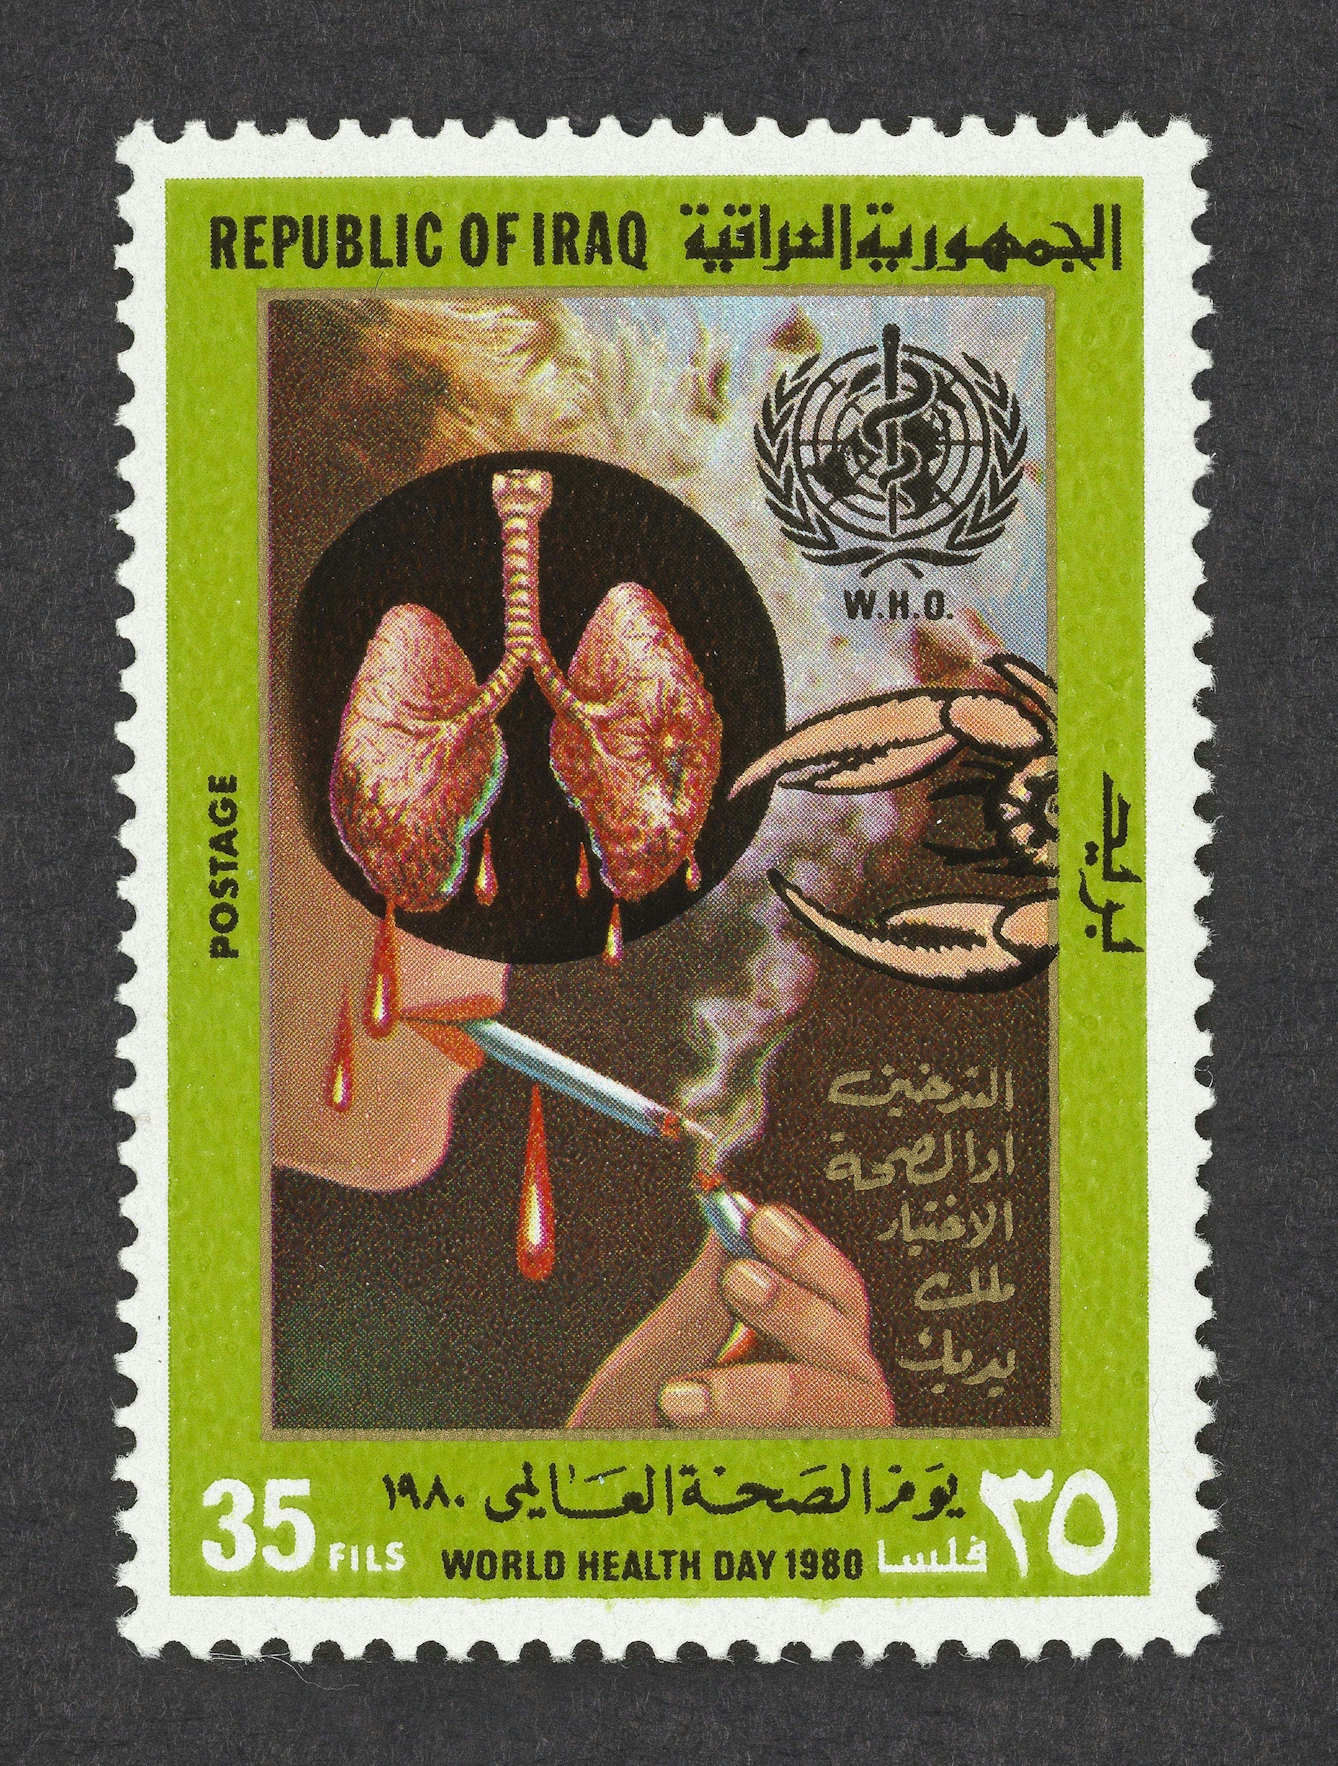 Republic of Iraq stamp